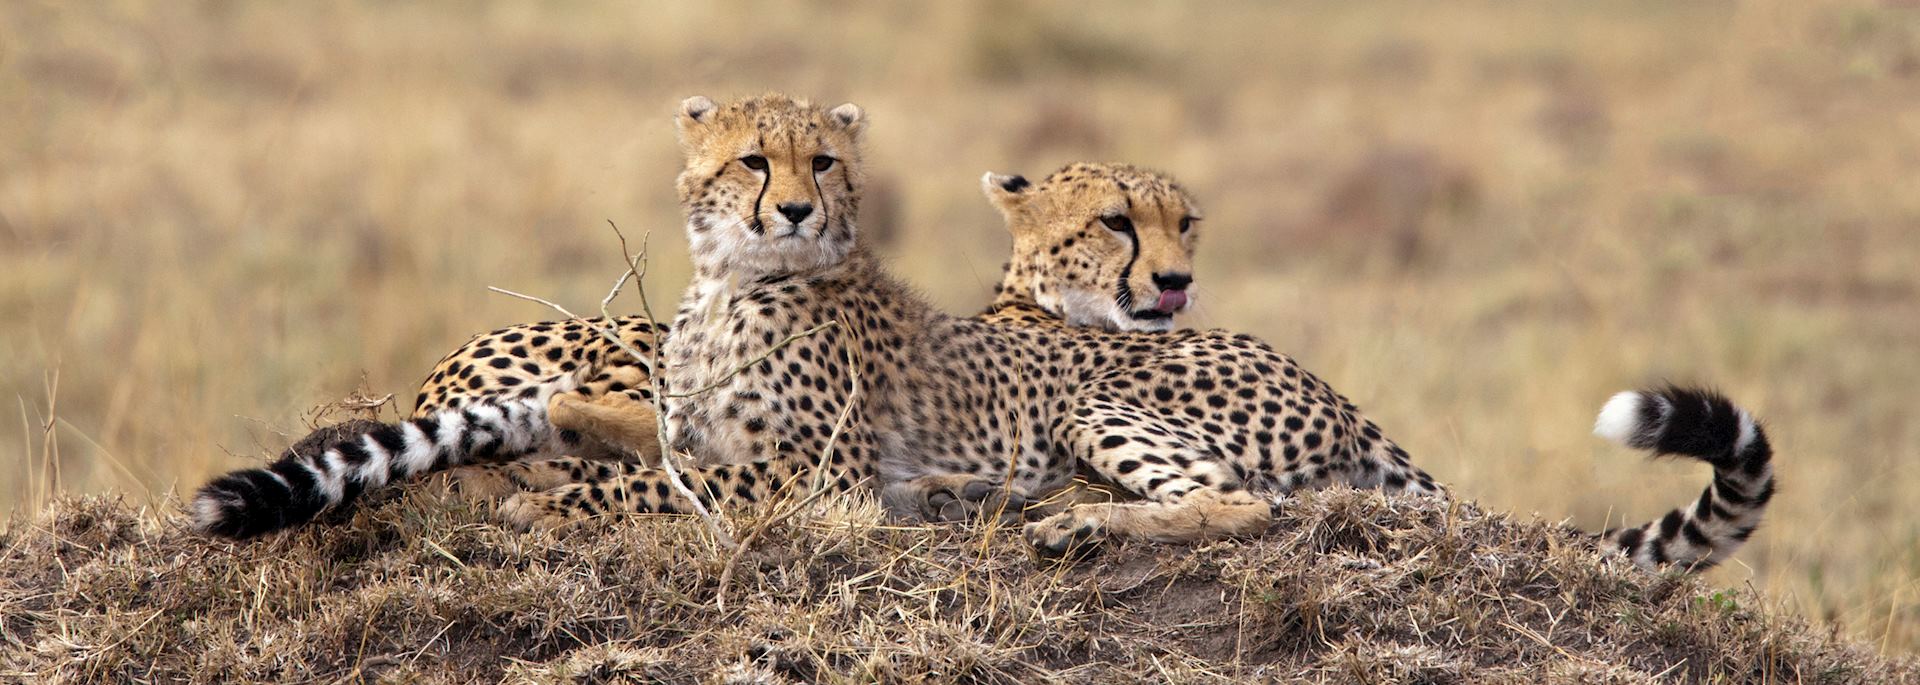 Cheetah in the Masai Mara National Reserve